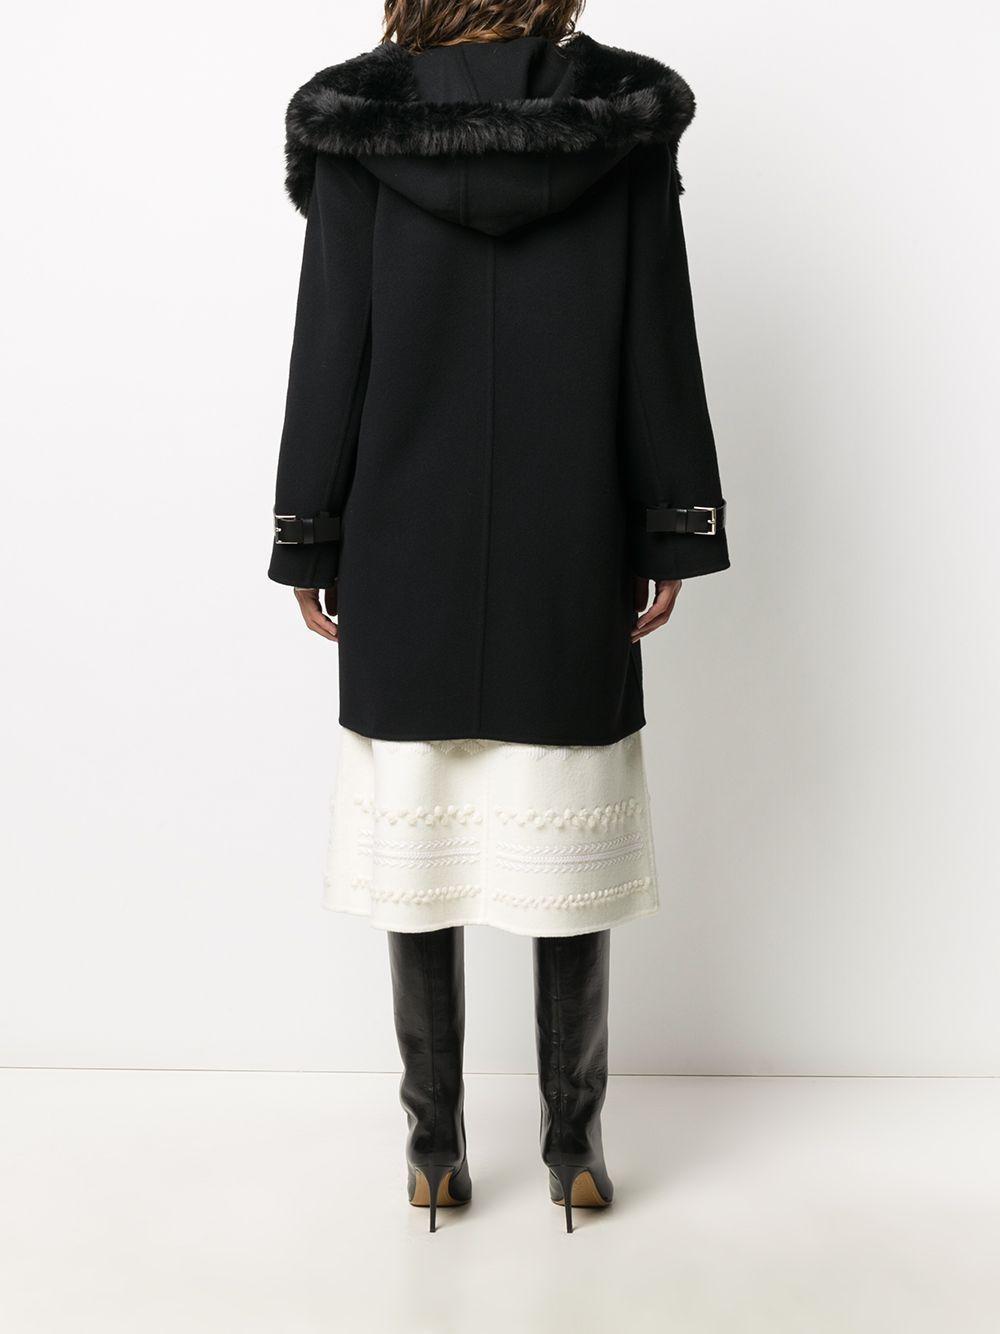 Ermanno Scervino Wool Faux Fur Trim Hooded Coat in Black - Lyst